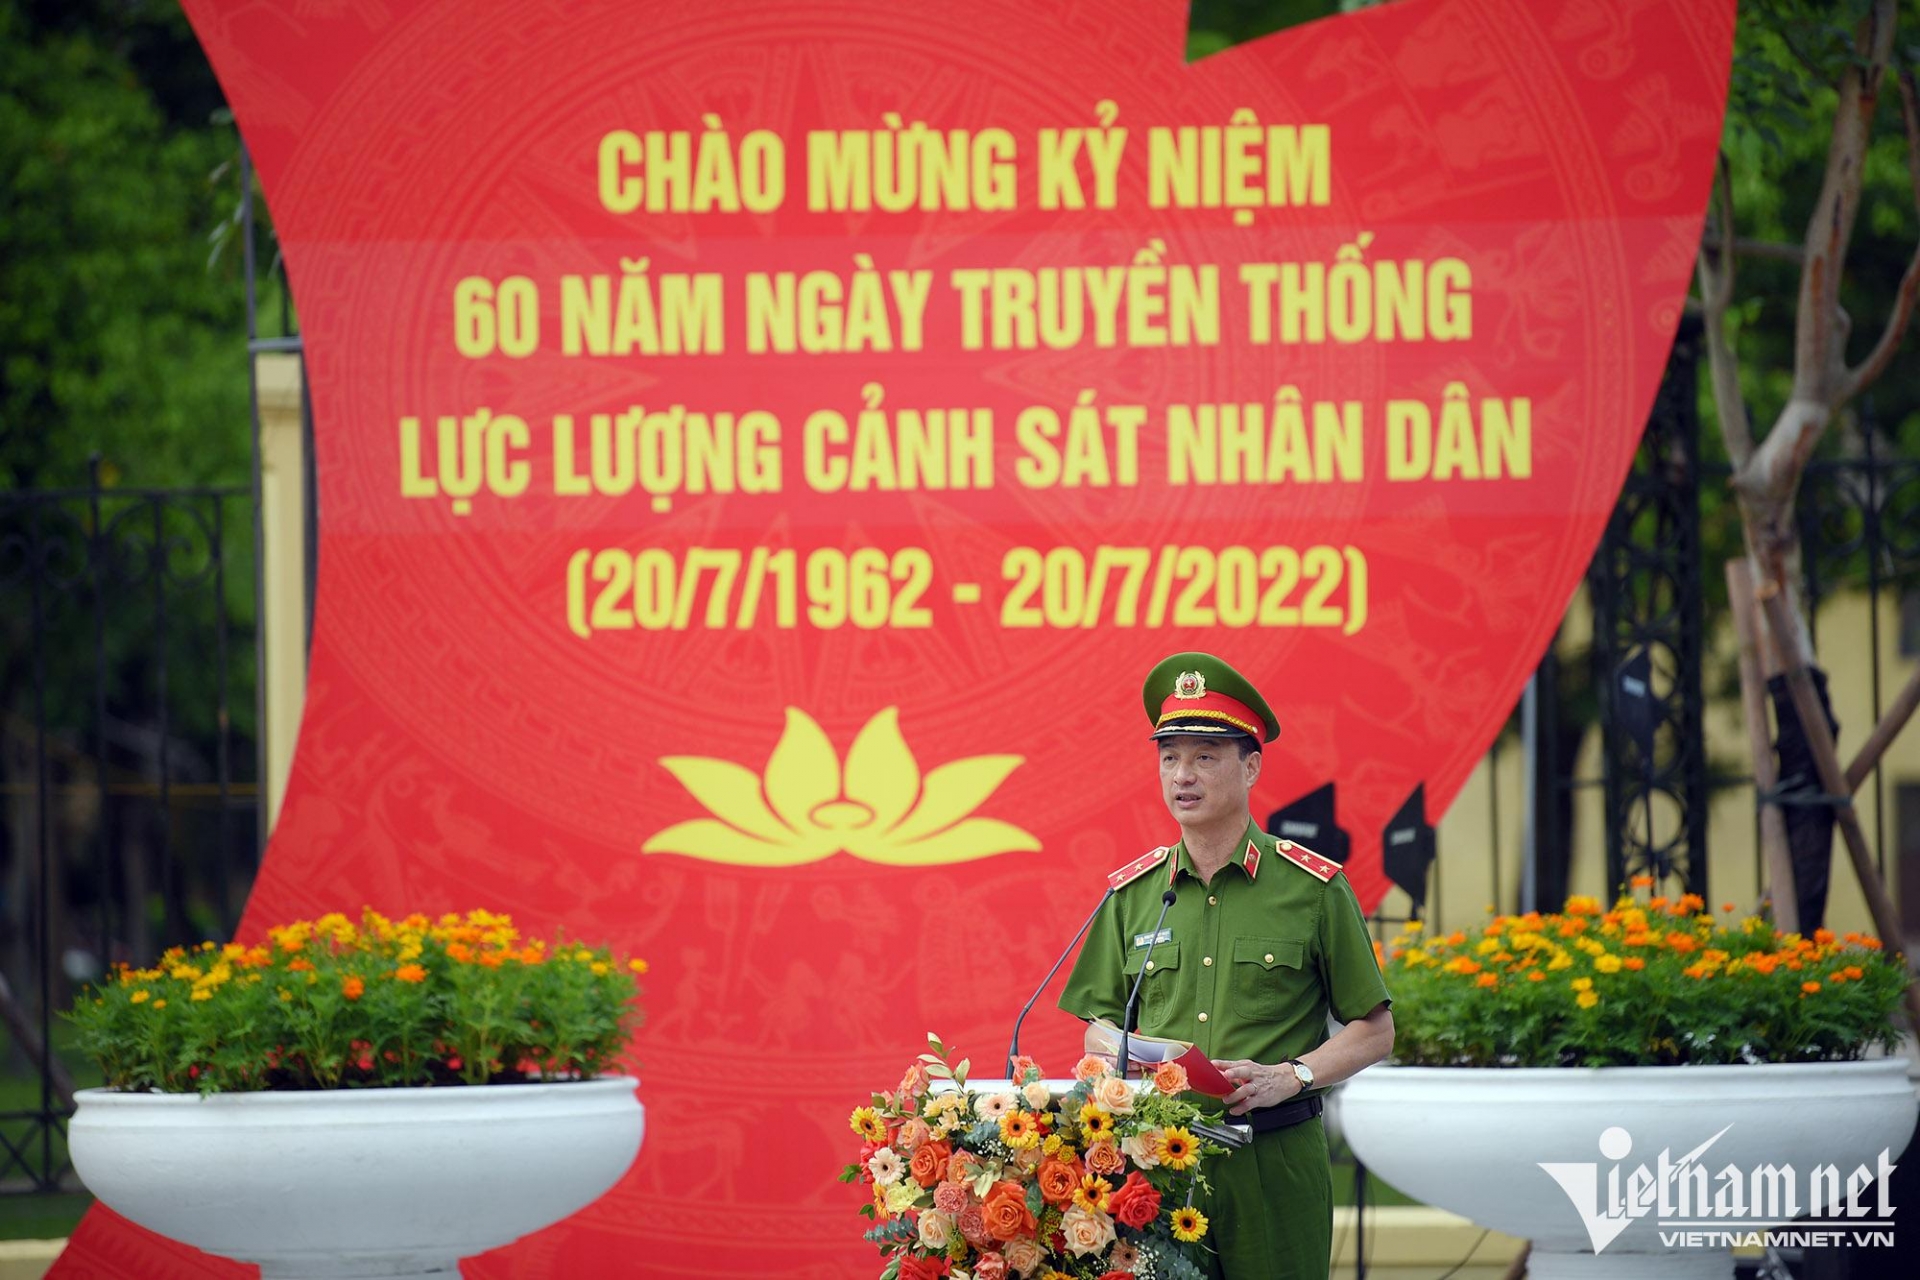 le khanh thanh tuong dai cong an nhan dan o ha noi